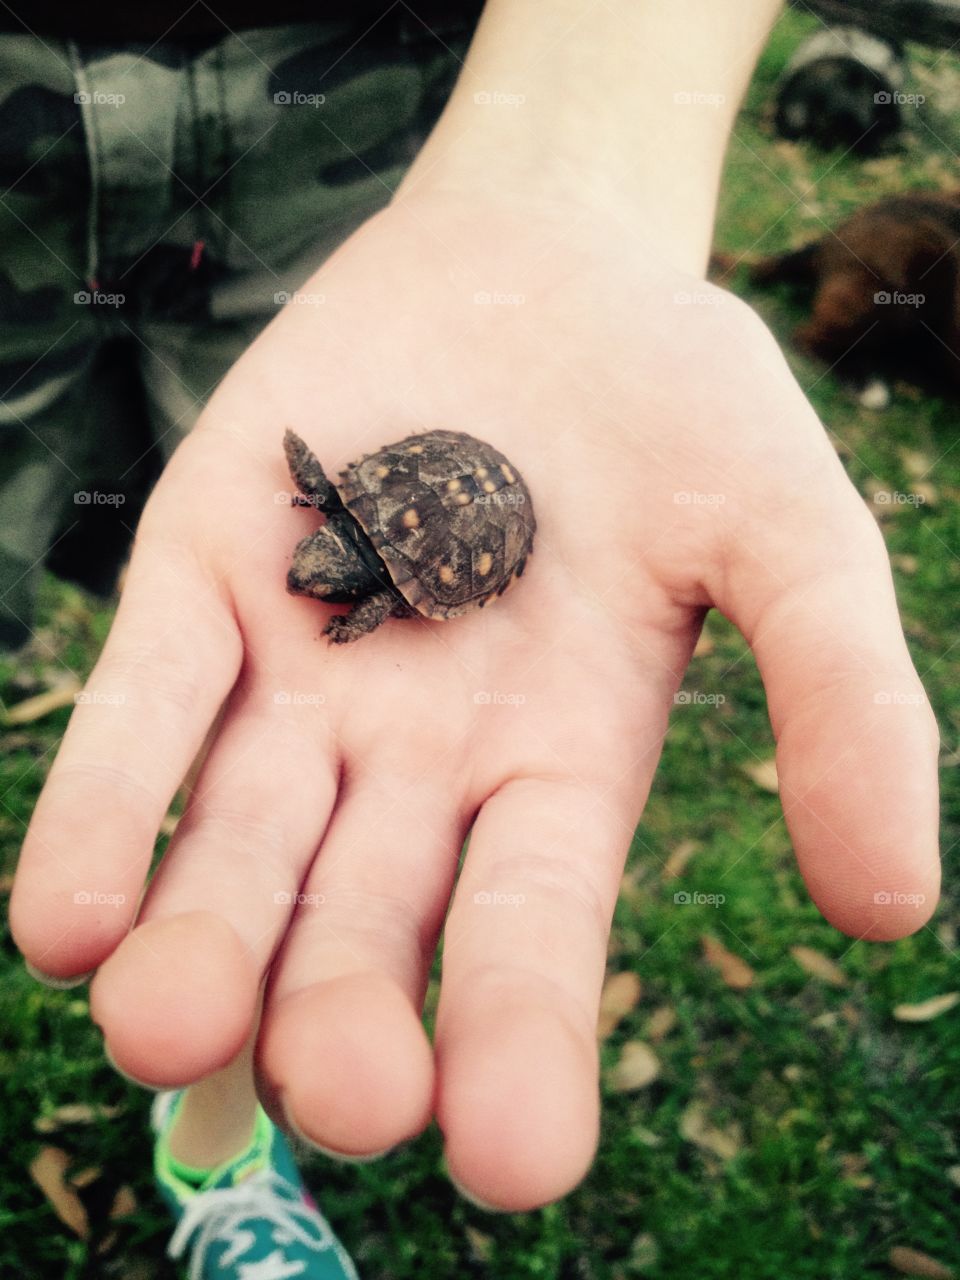 Tiny turtle. Child holding baby turtle